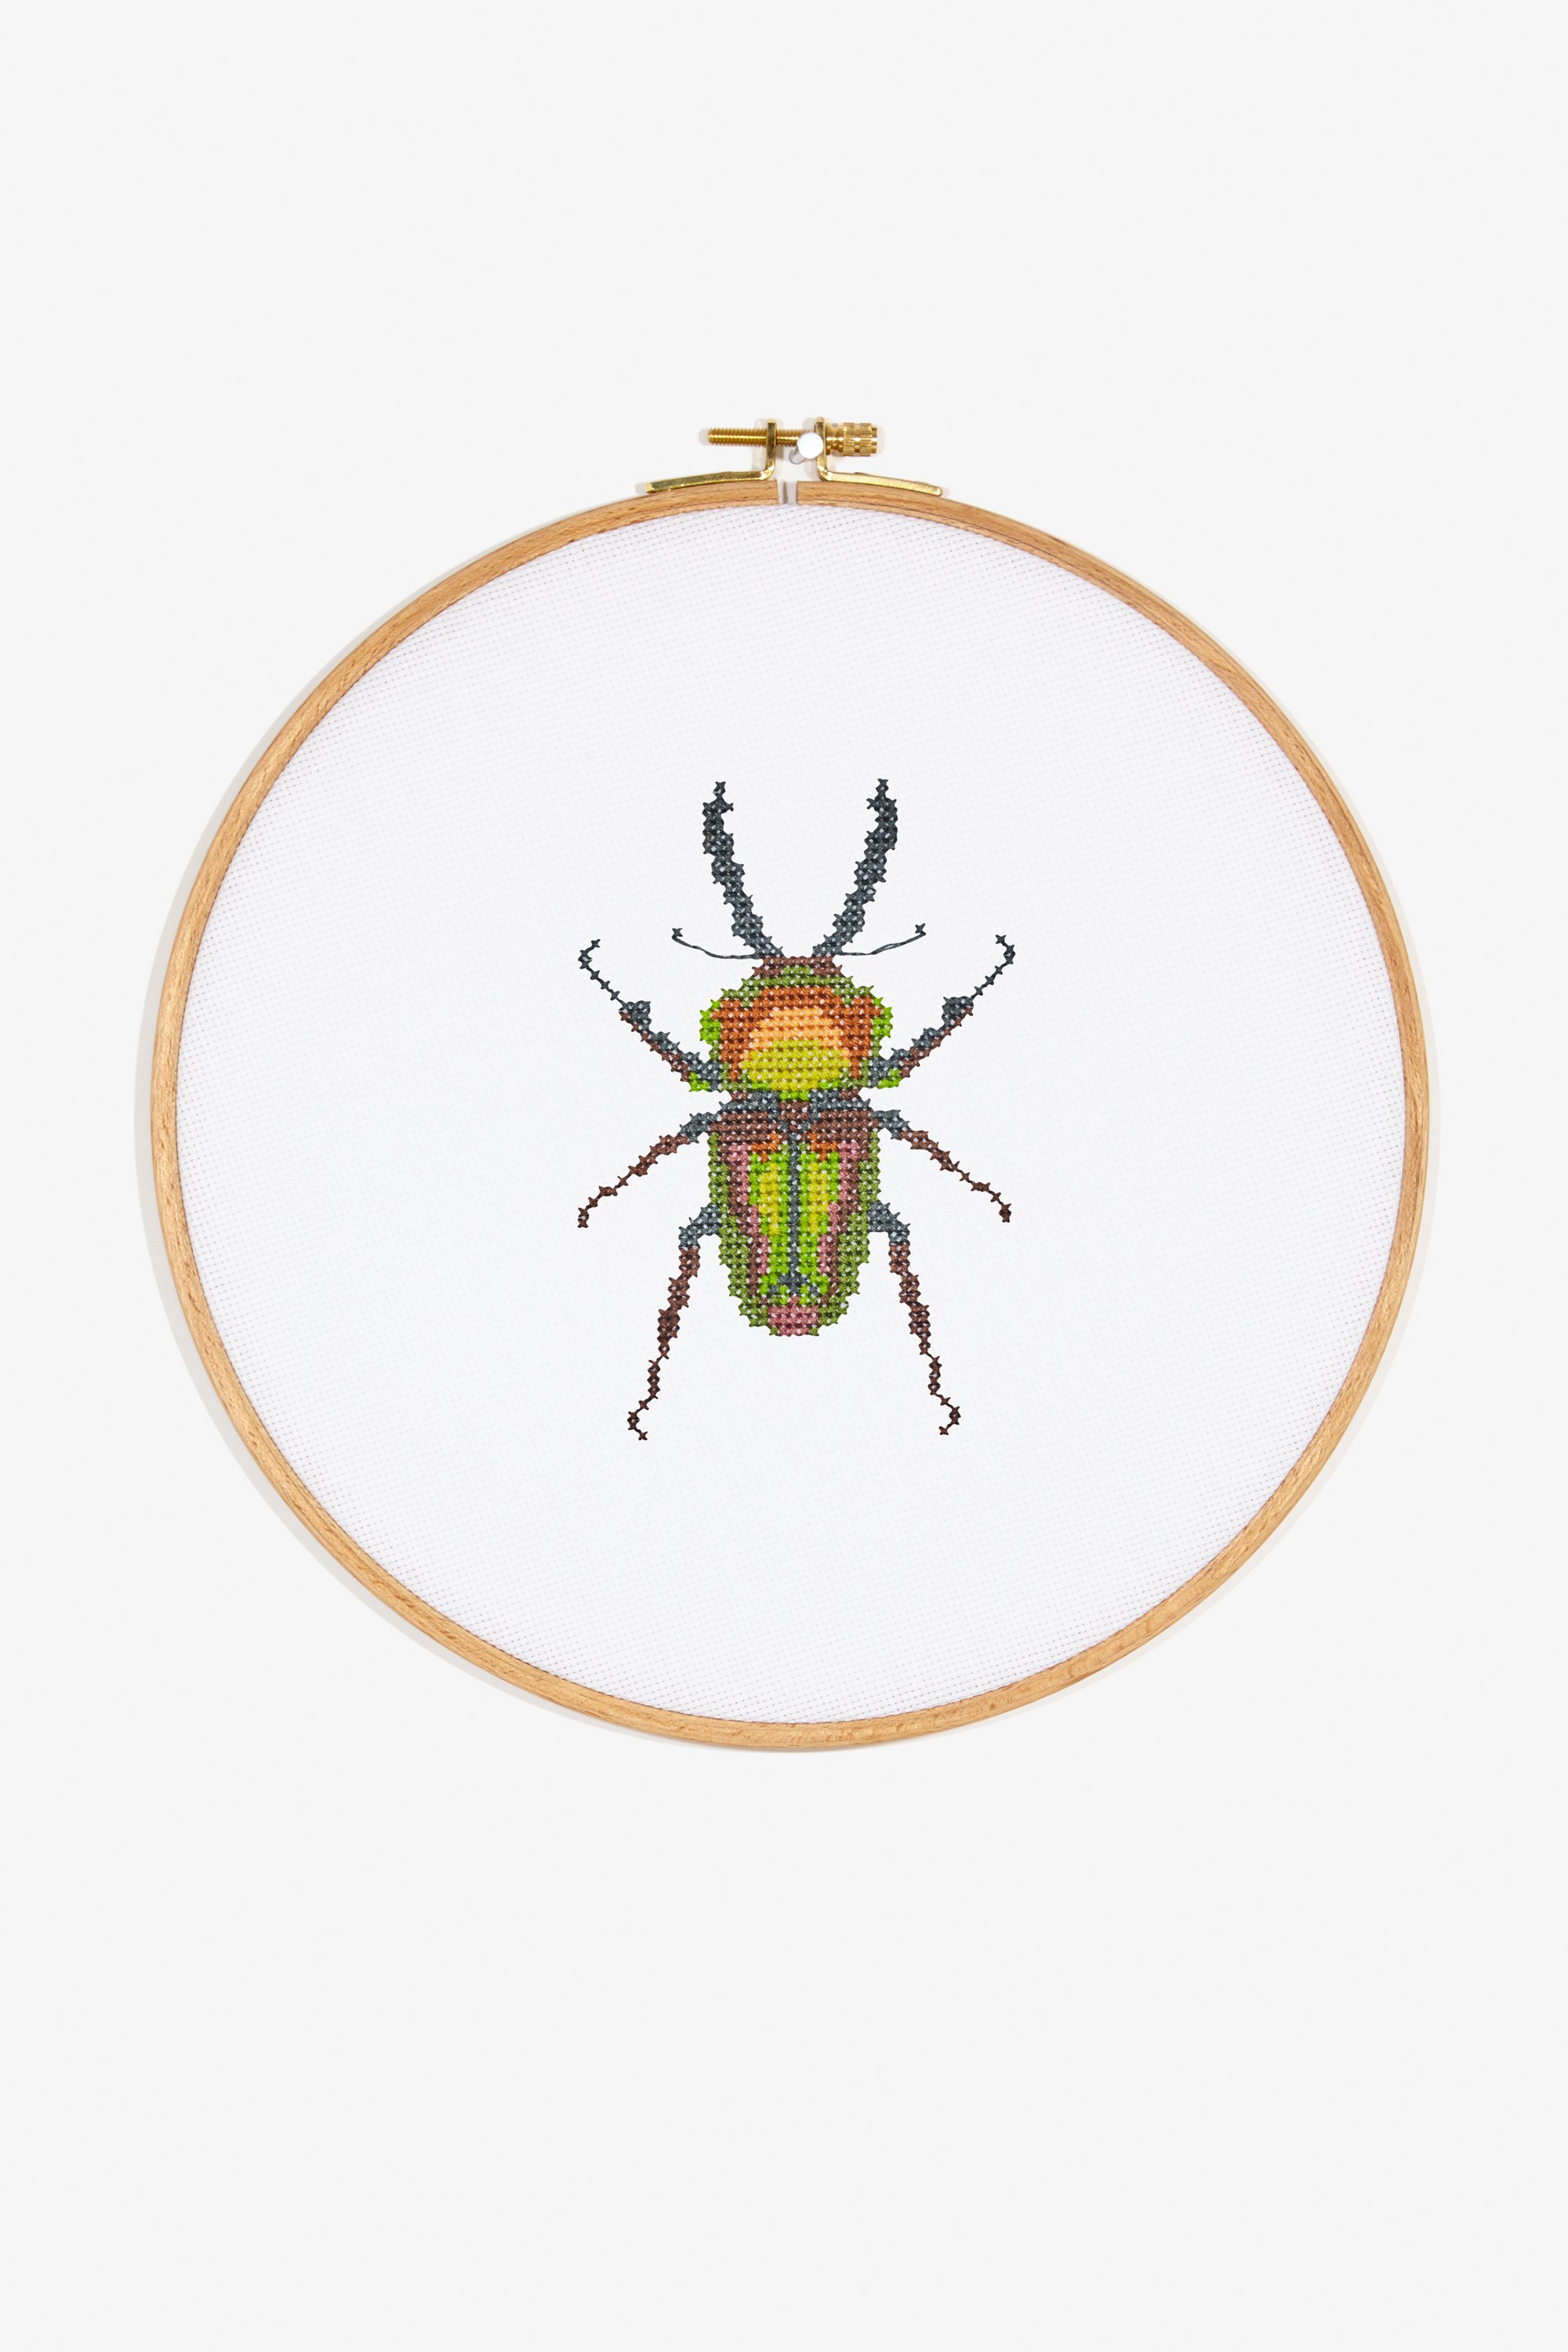 Beetle modern cross stitch pattern instant download #CS030